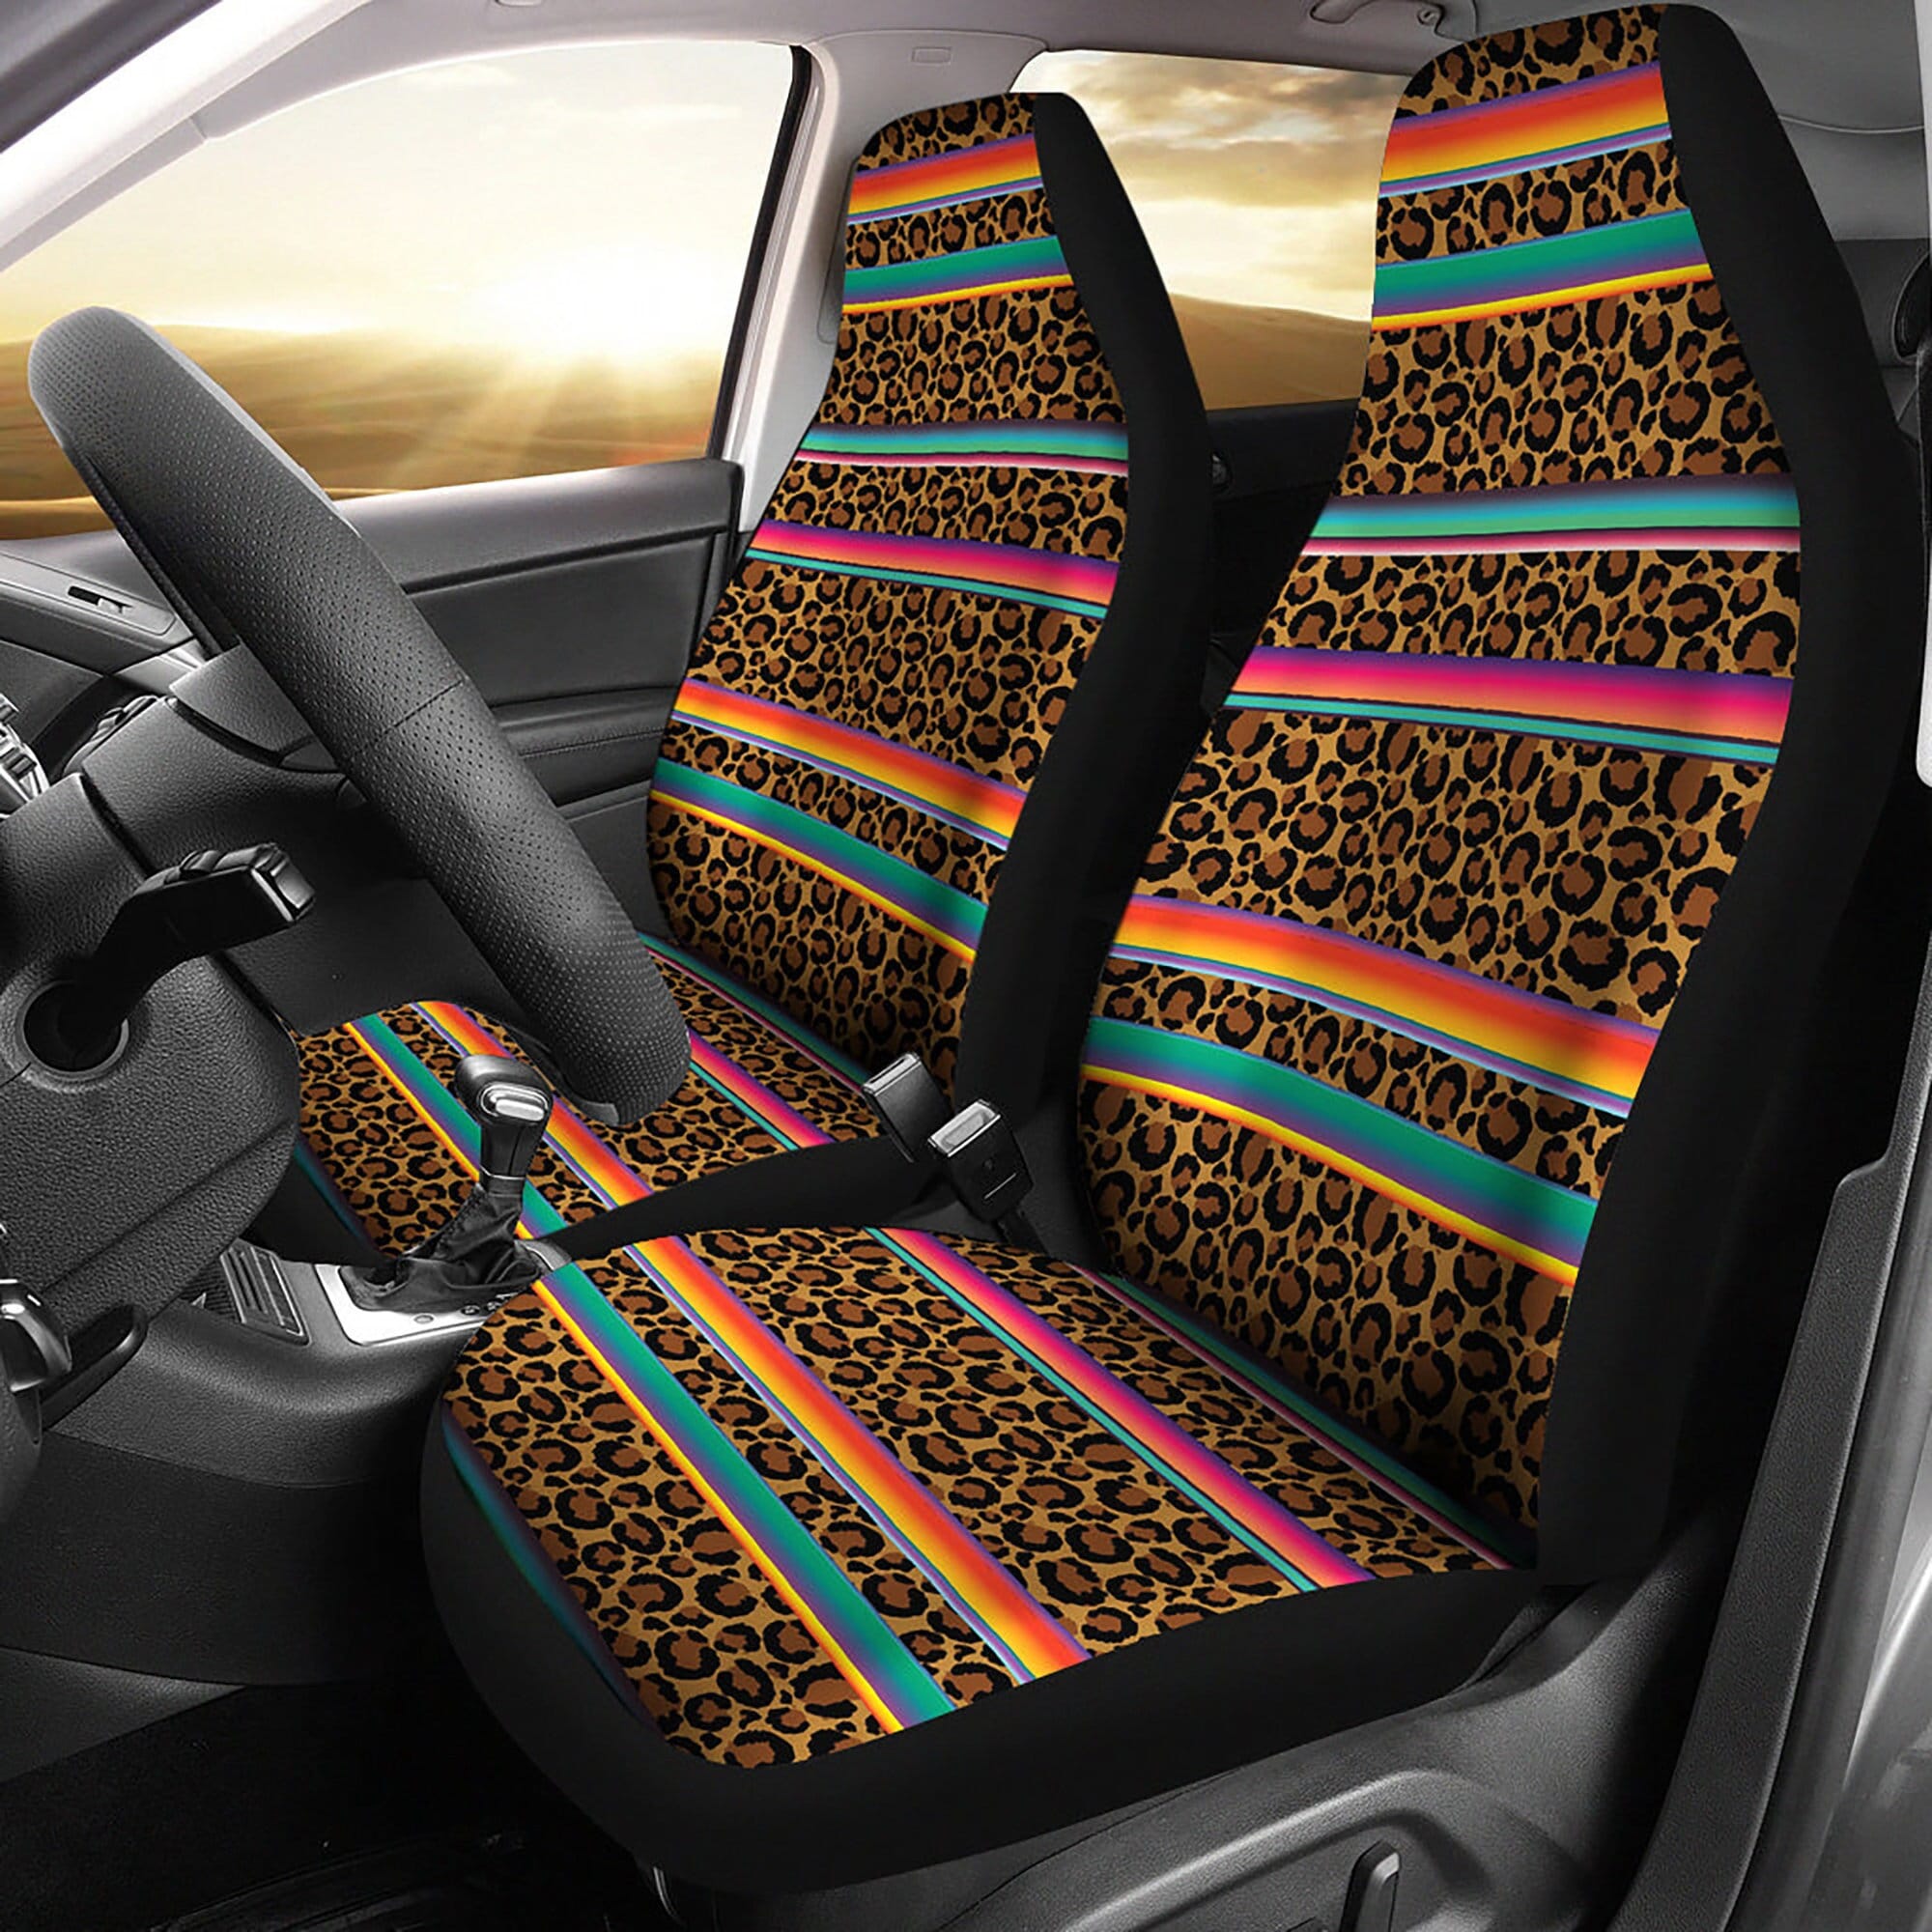 Natural Car Seat Cover filling Organic Buckwheat hulls in high quality –  HempOrganicLife